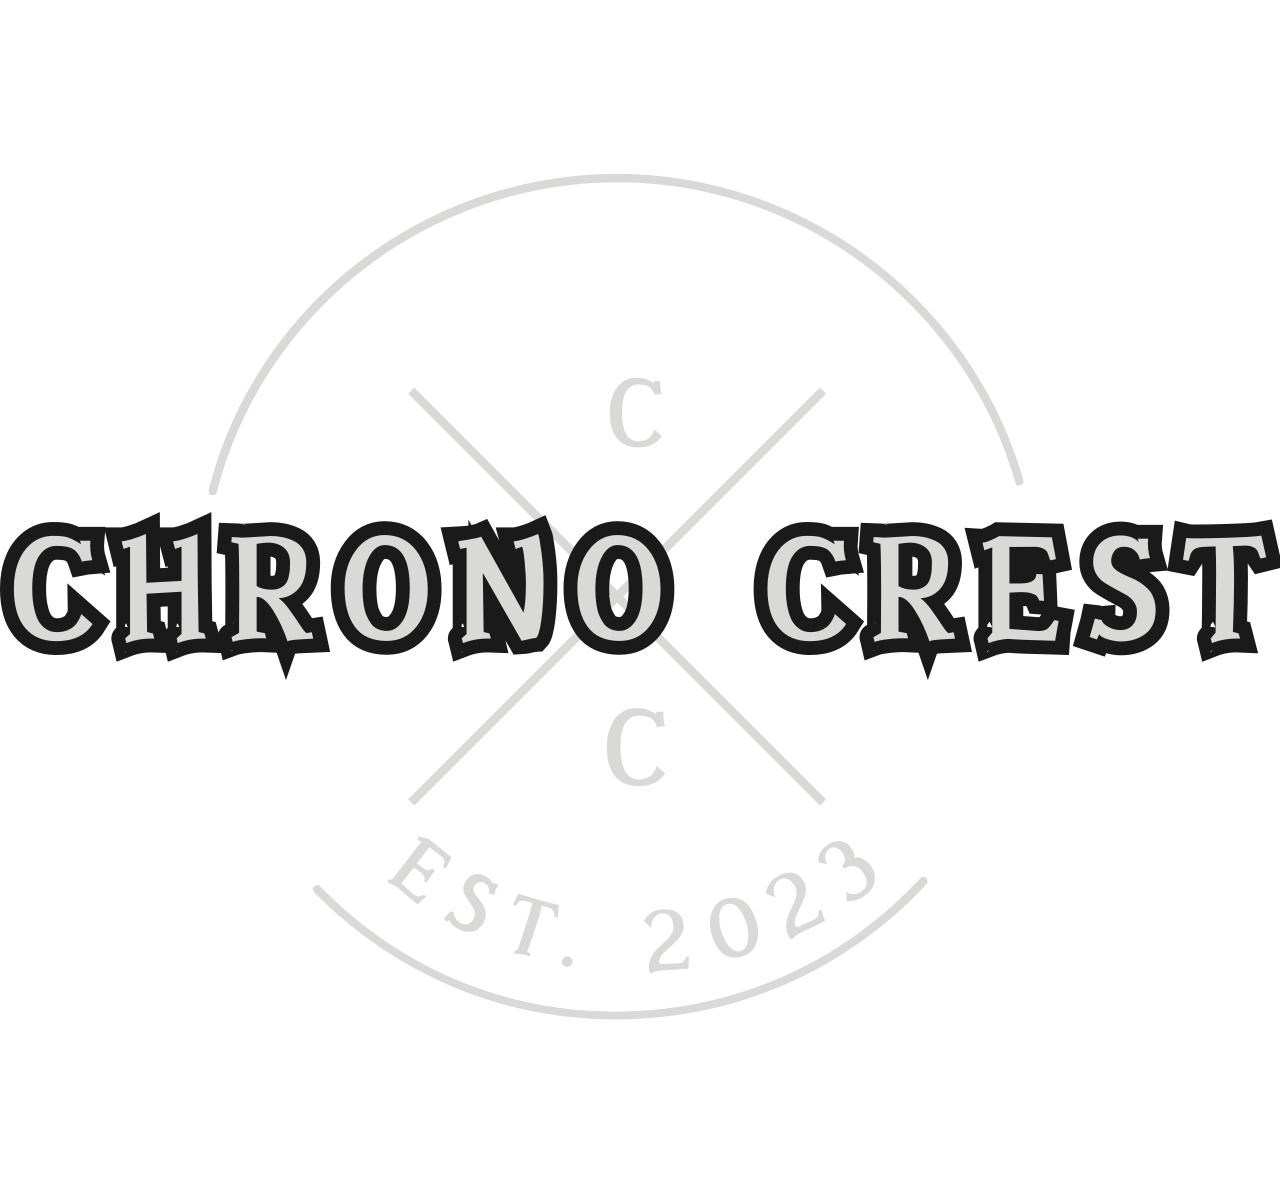 Chrono Crest's logo